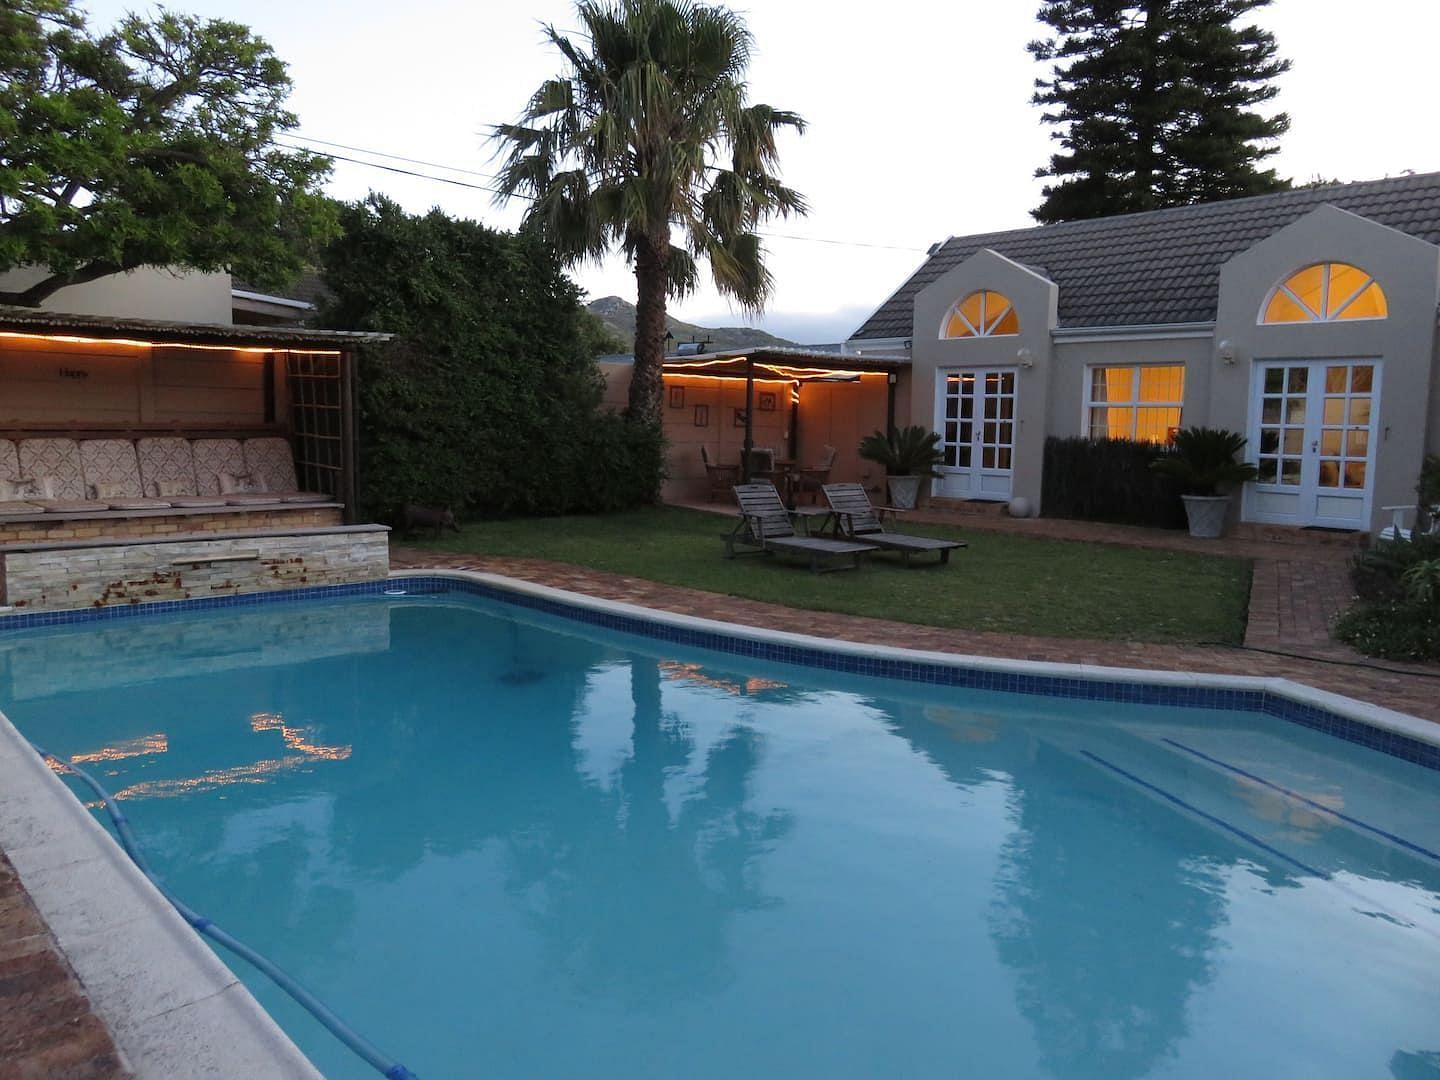 JWguest Residential Home at Cape Town, Western Cape | Wonderful Studio Apartment between 2 Oceans #1 | Jwbnb no brobnb 18